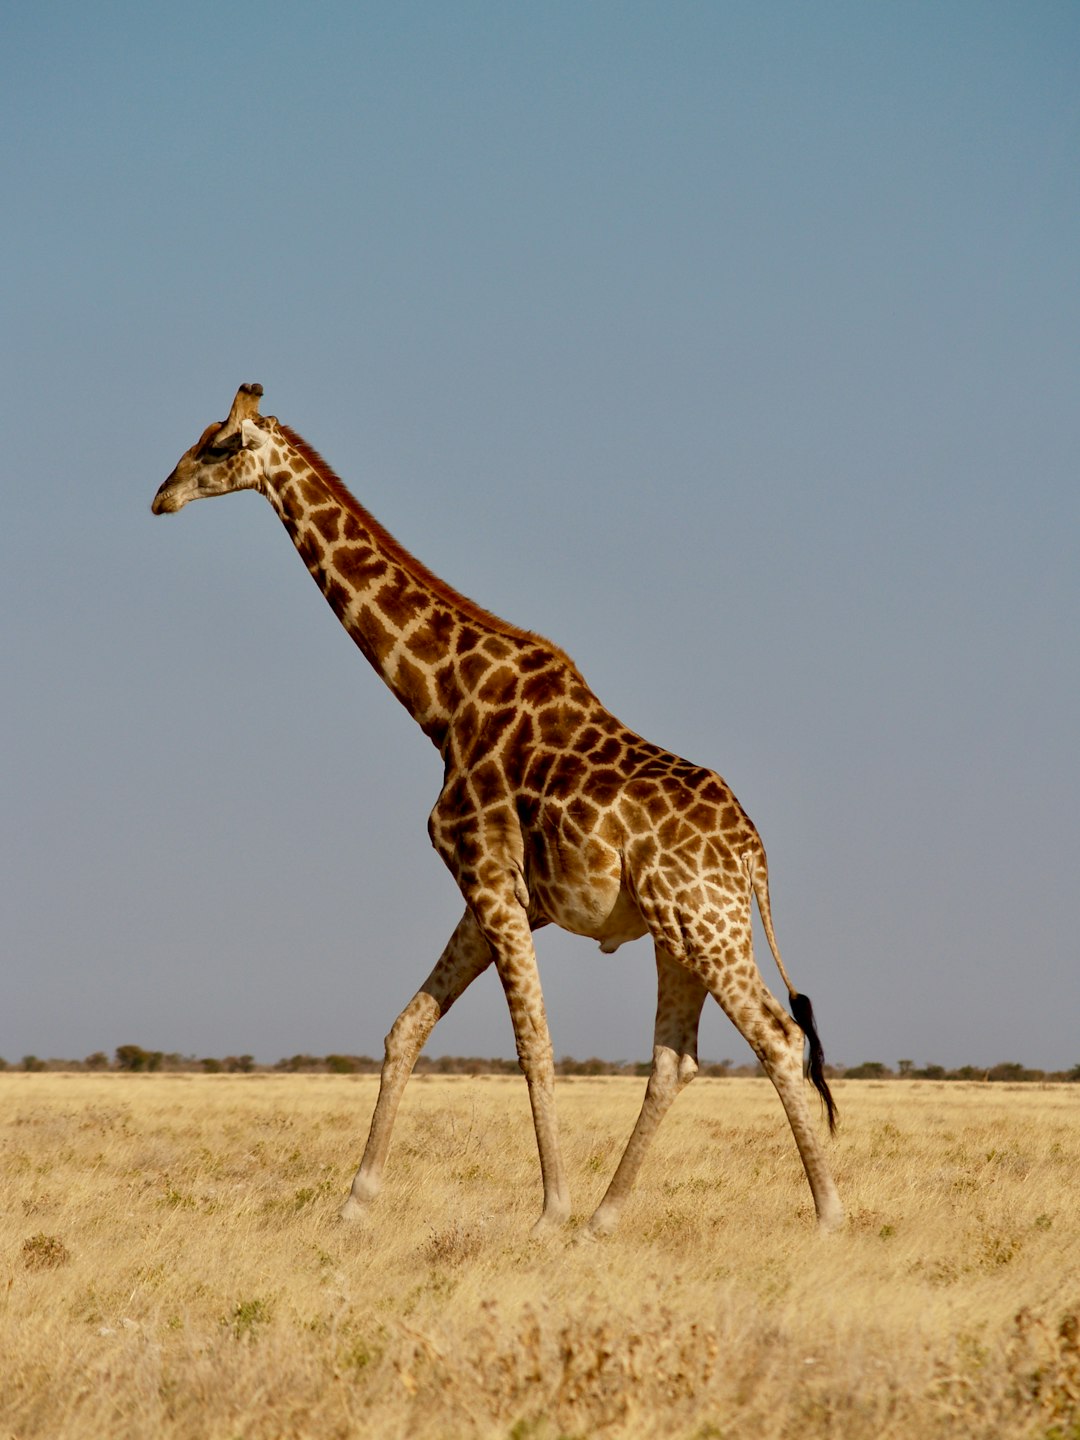 brown giraffe walking on brown field during daytime